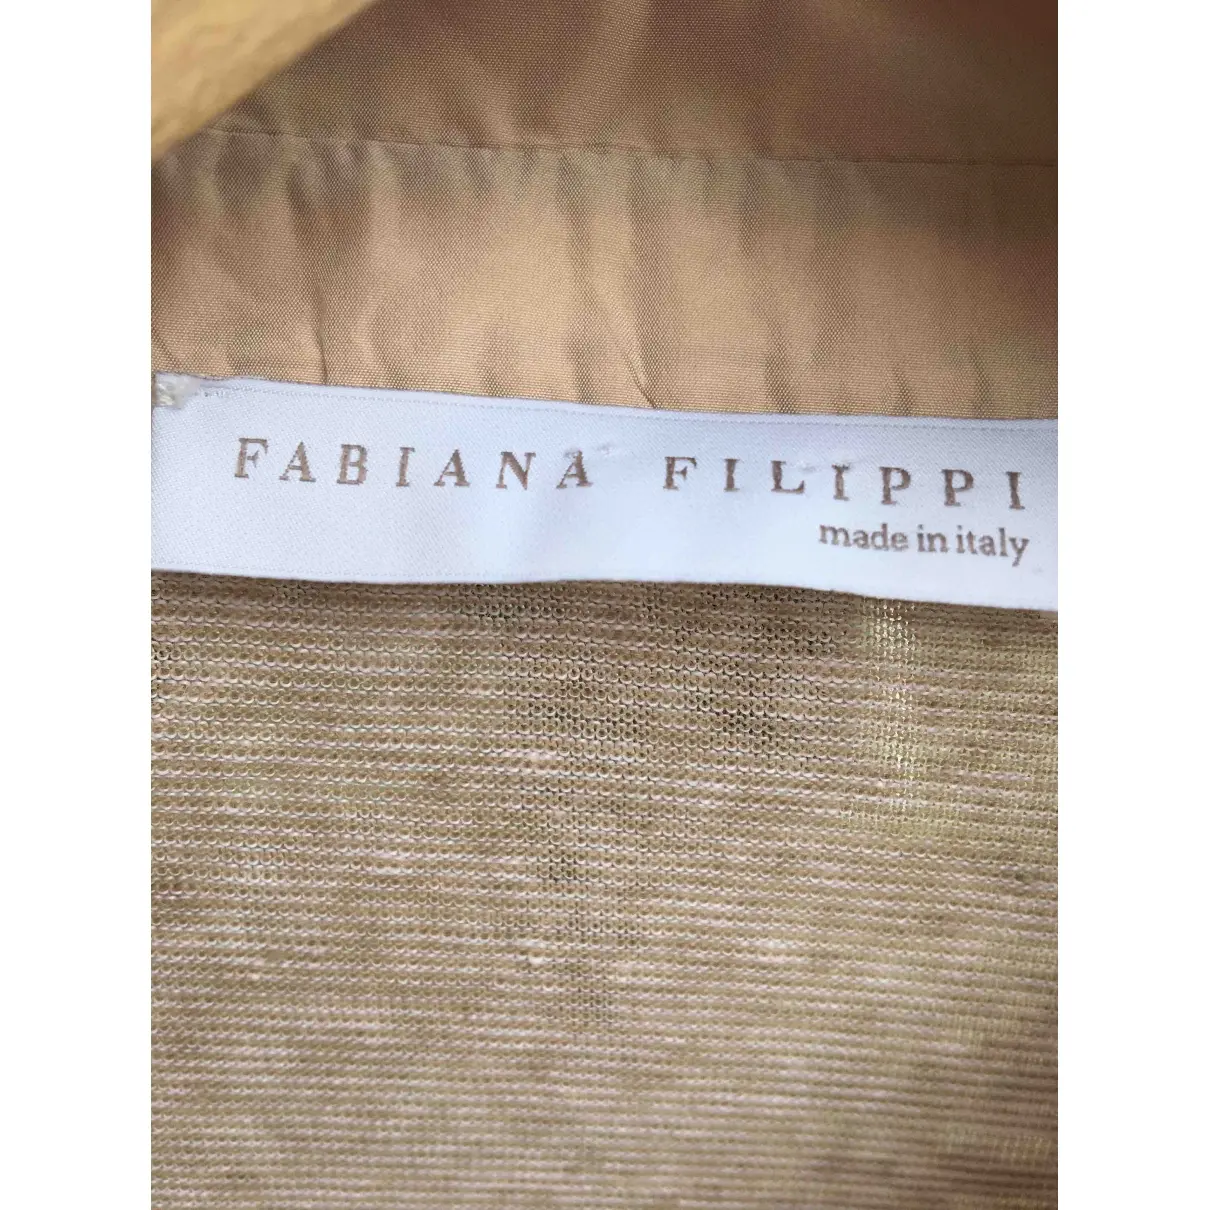 Buy Fabiana Filippi Beige Cotton Top online